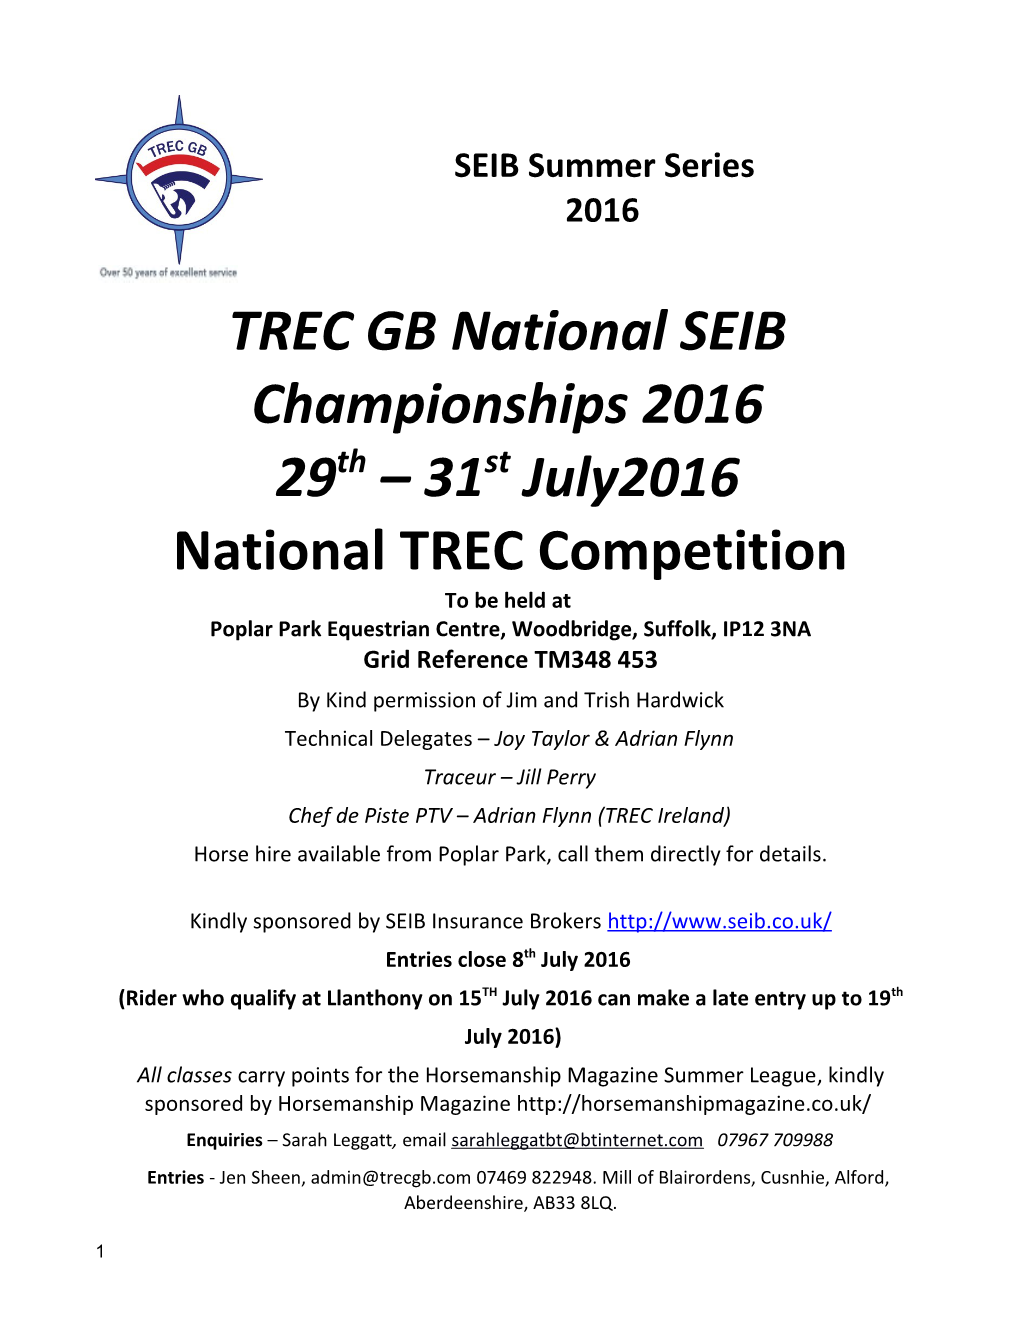 TREC GB National SEIB Championships 2016